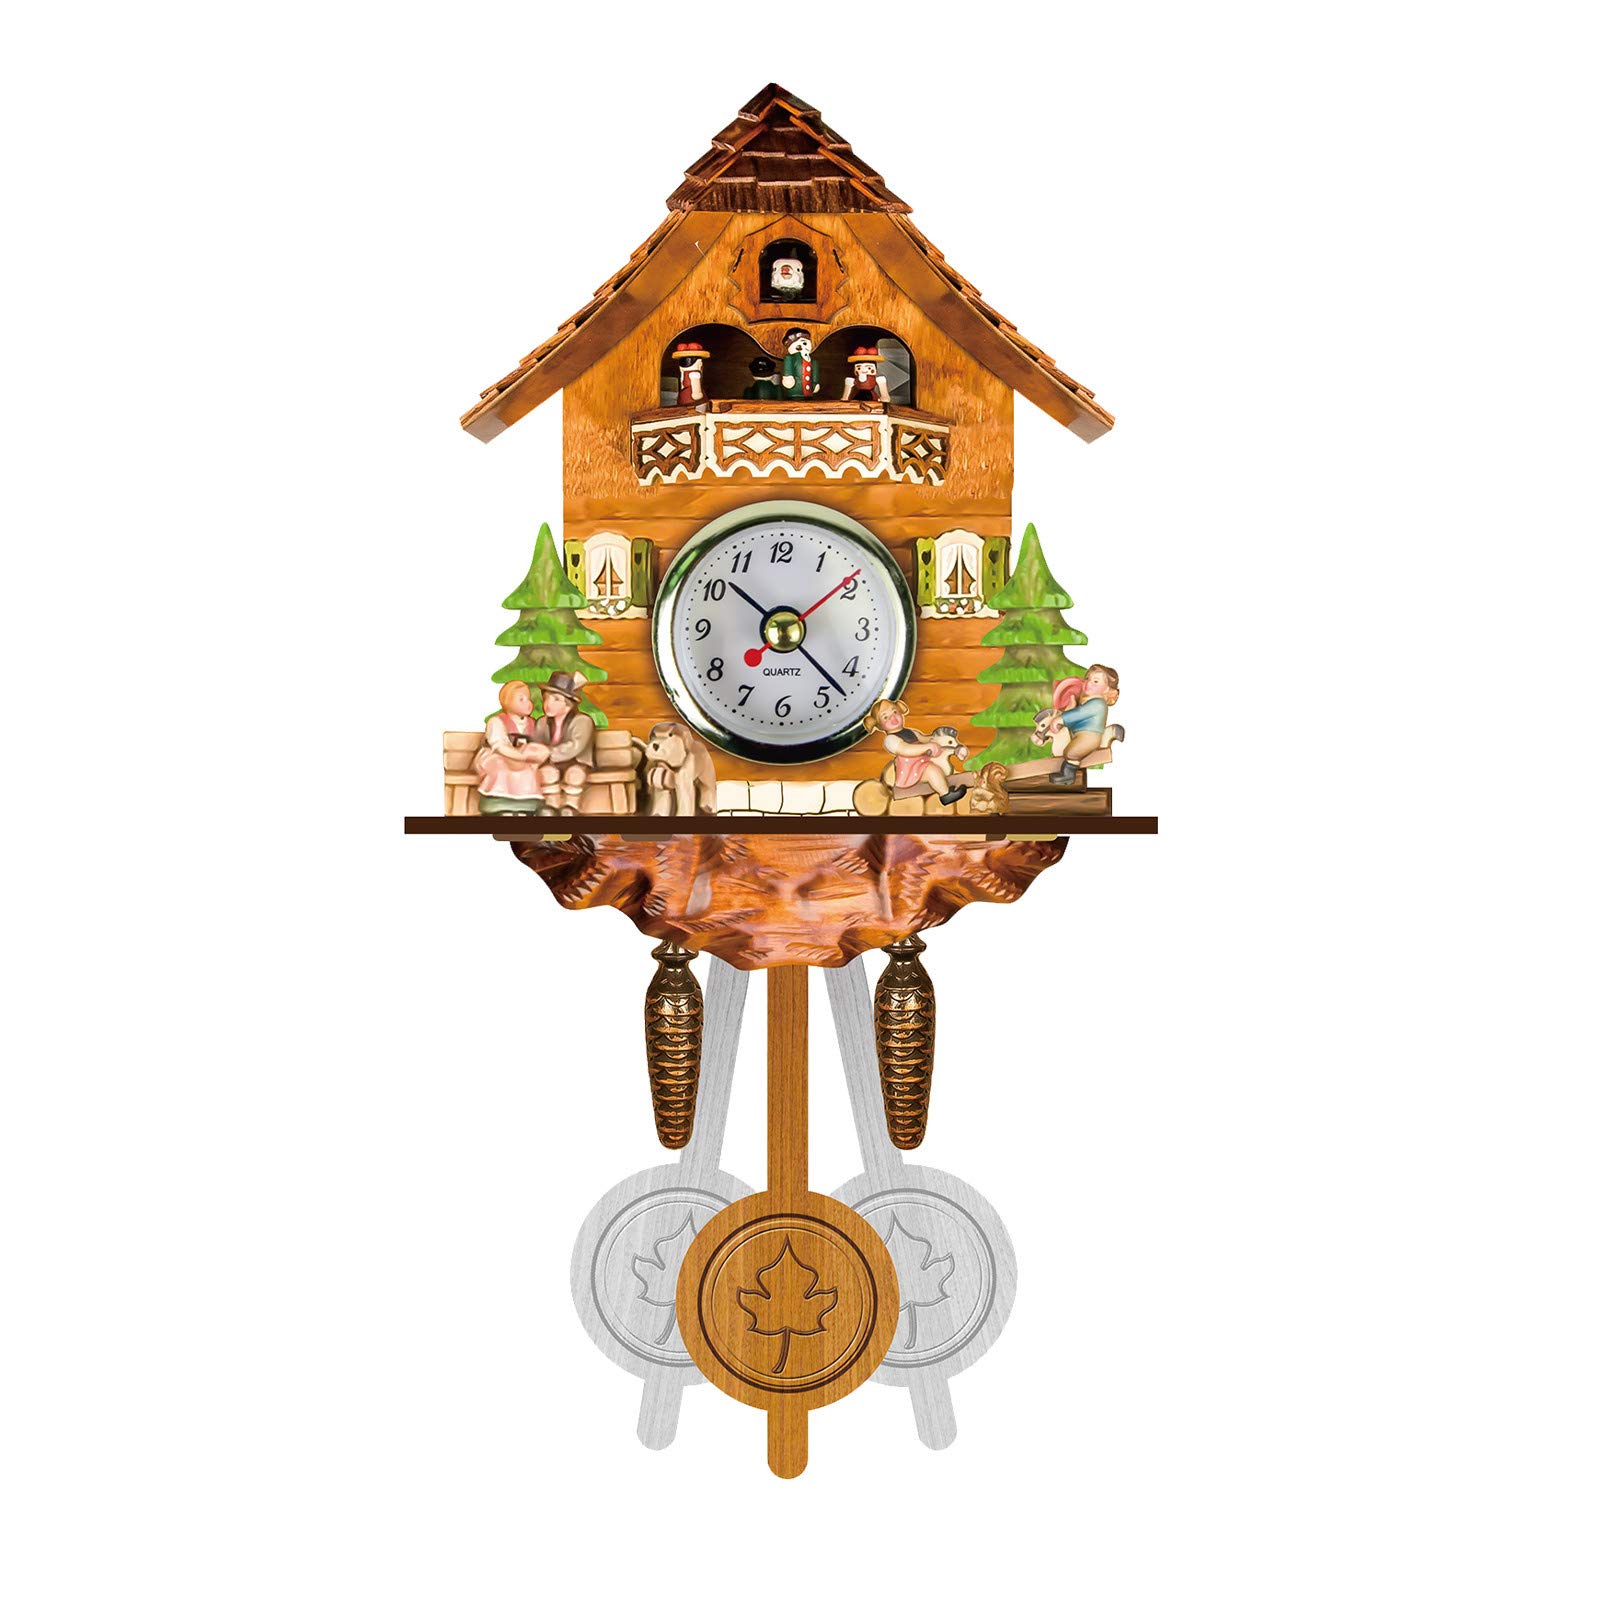 Cuckoo Clock Quartz Cuckoo Clock for Wall, Antique Wooden Handcrafted Chalet Cuckoo Birdhouse Wall Clock, Pendulum Wall Clock Home Decor Hanging Cu...